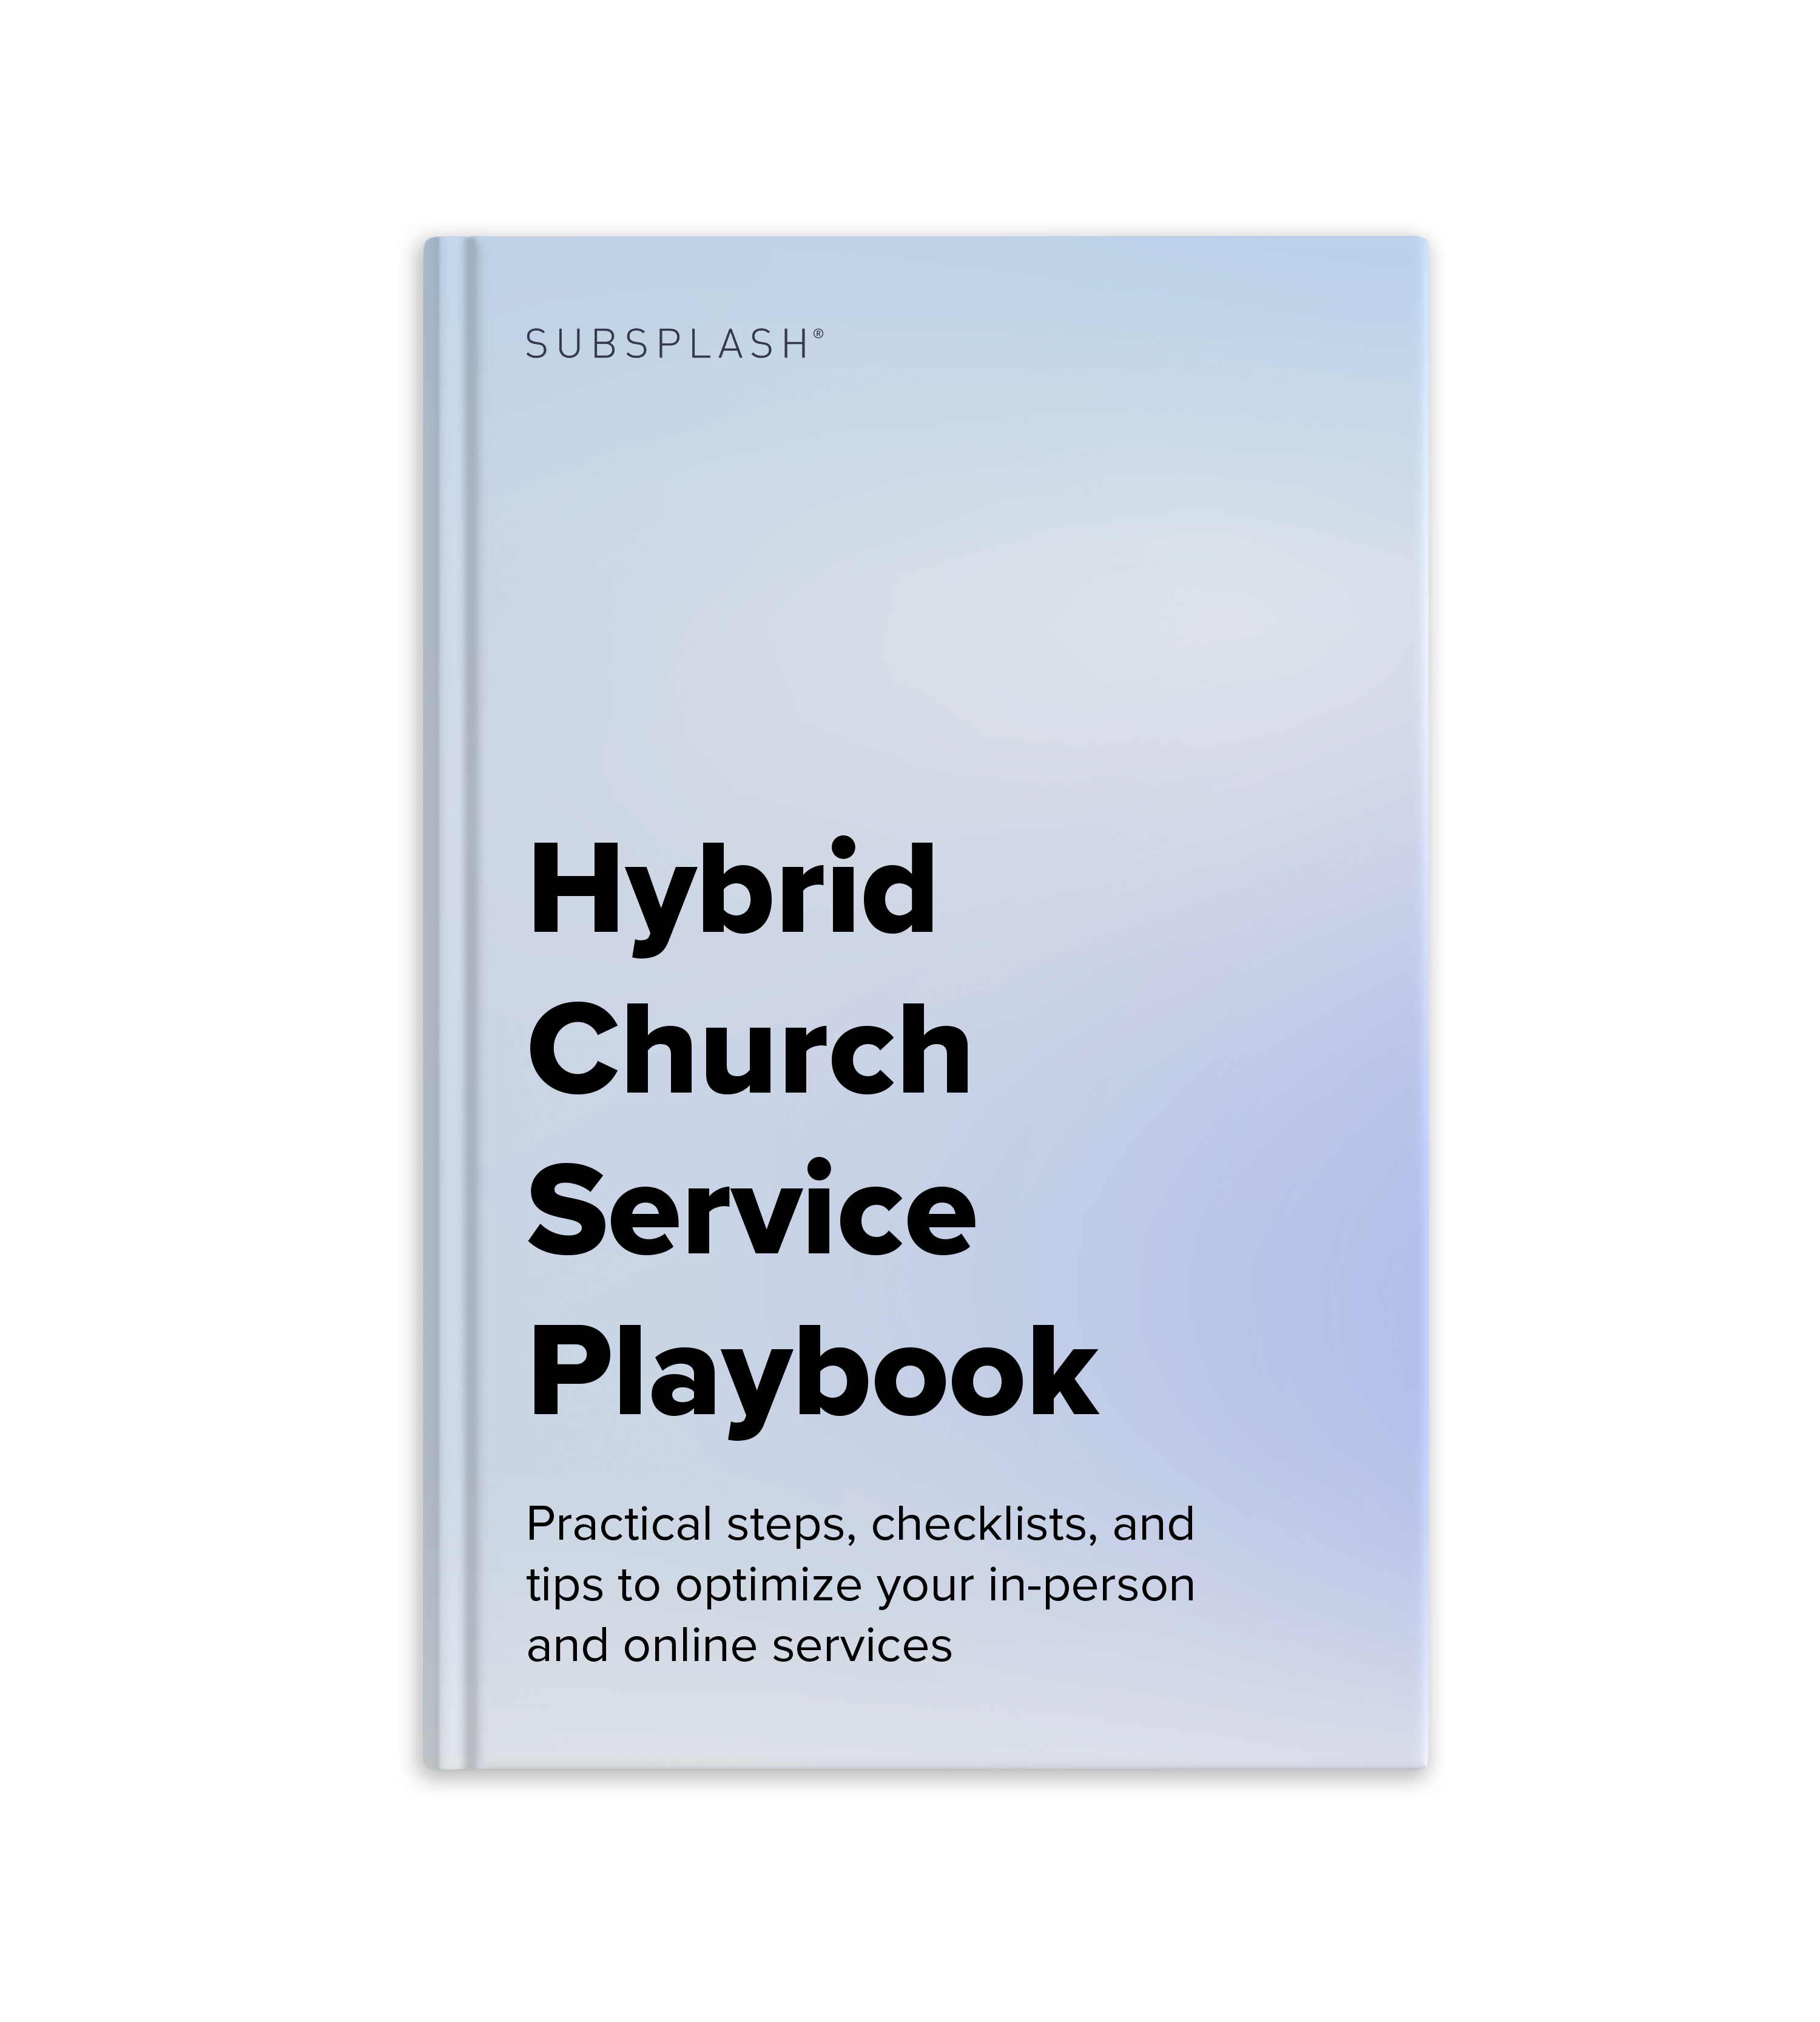 Hybrid Church Service Playbook